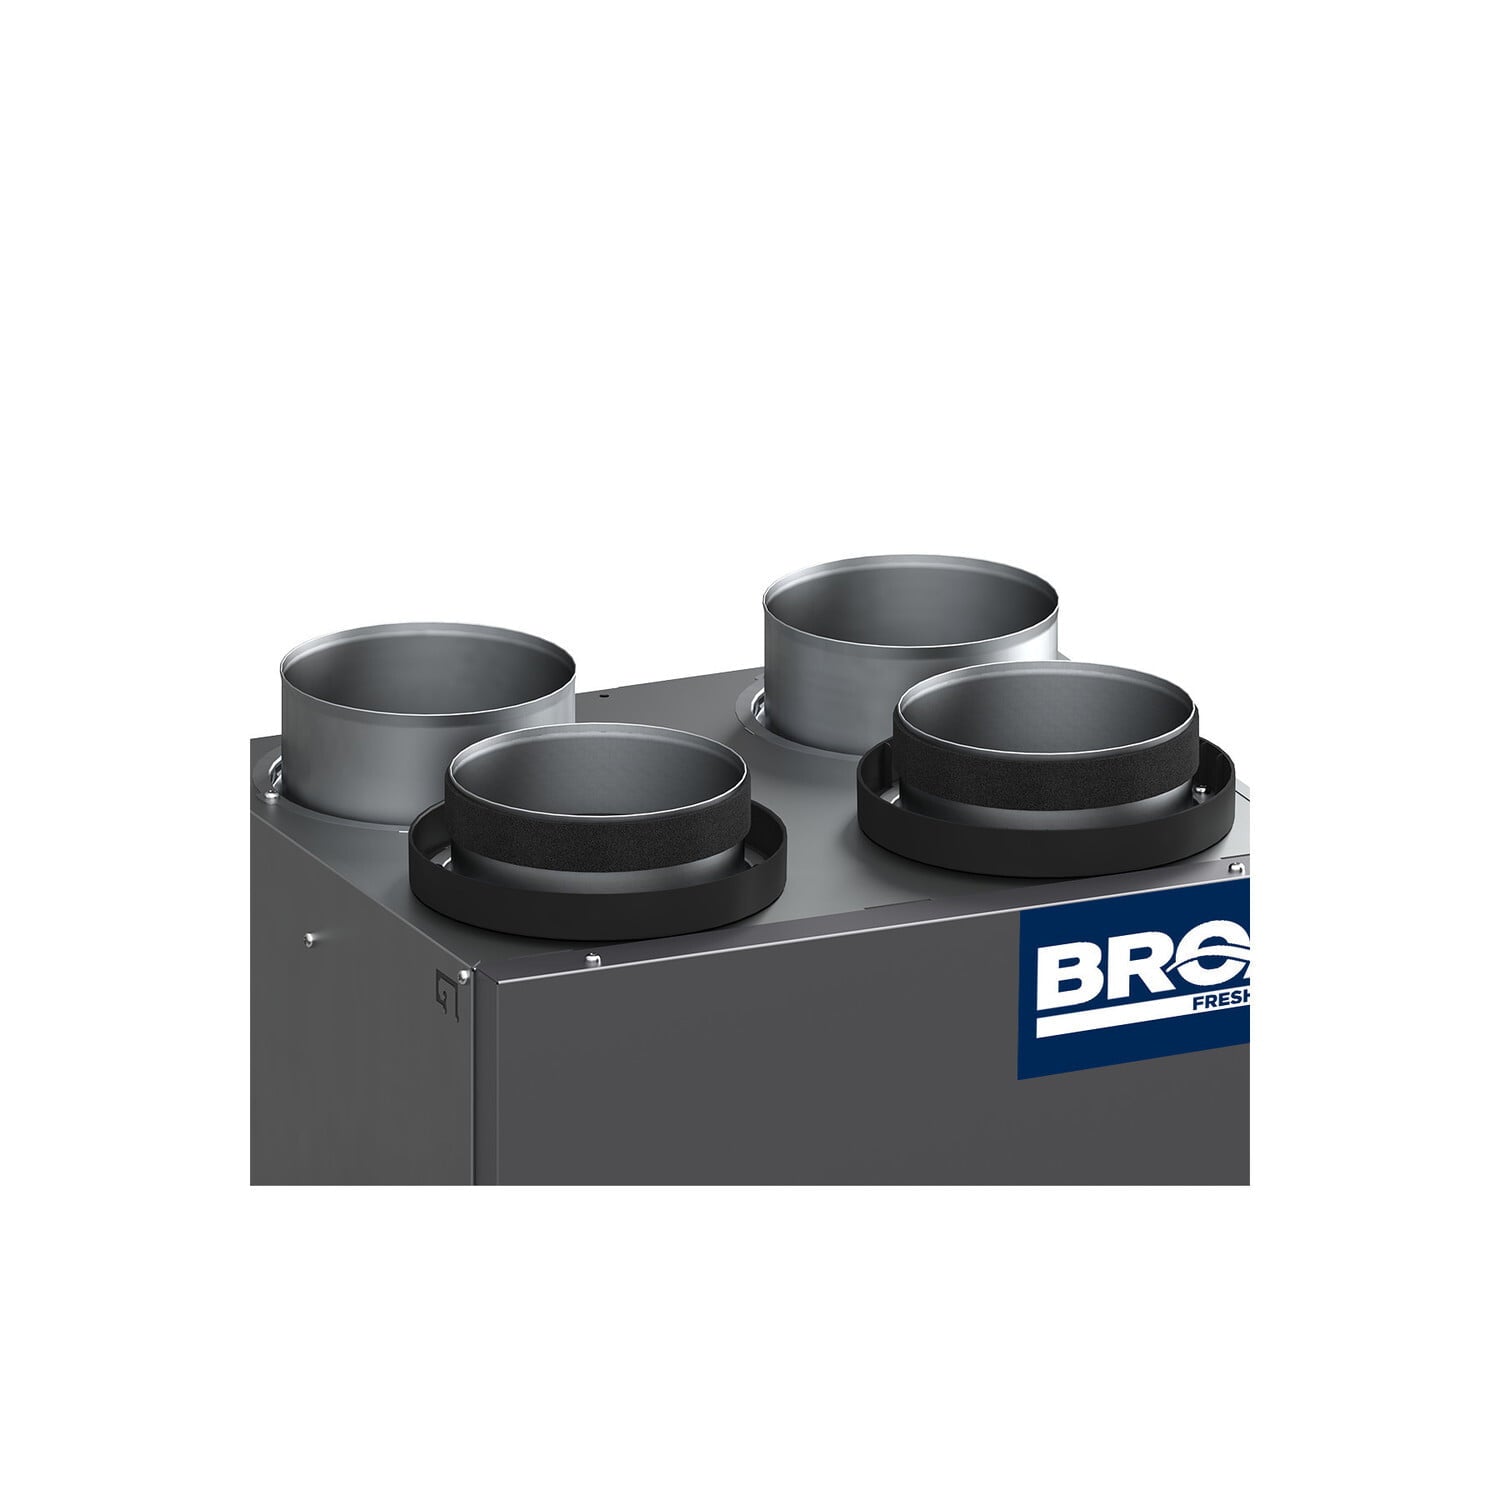 Broan B160H75RT Advanced Touchscreen Control